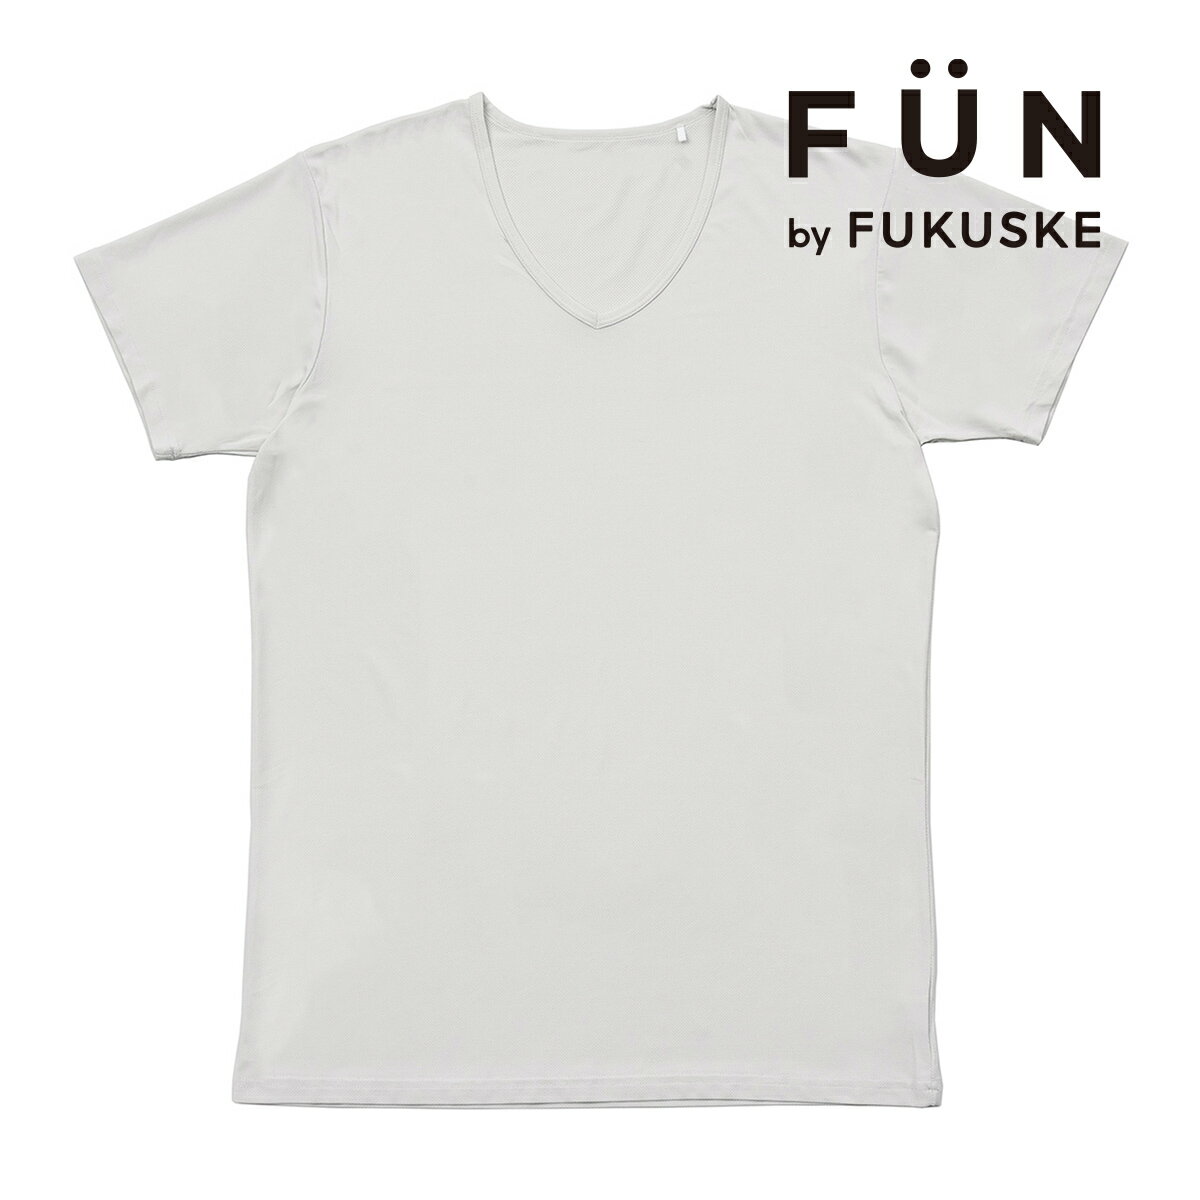 fukuske FUN(フクスケファン) ： 無地 Tシャツ 半袖 ナイロンメッシュ(453P0001) 紳士 男性 メンズ インナー 肌着 下着 フクスケ fukuske 福助 公式